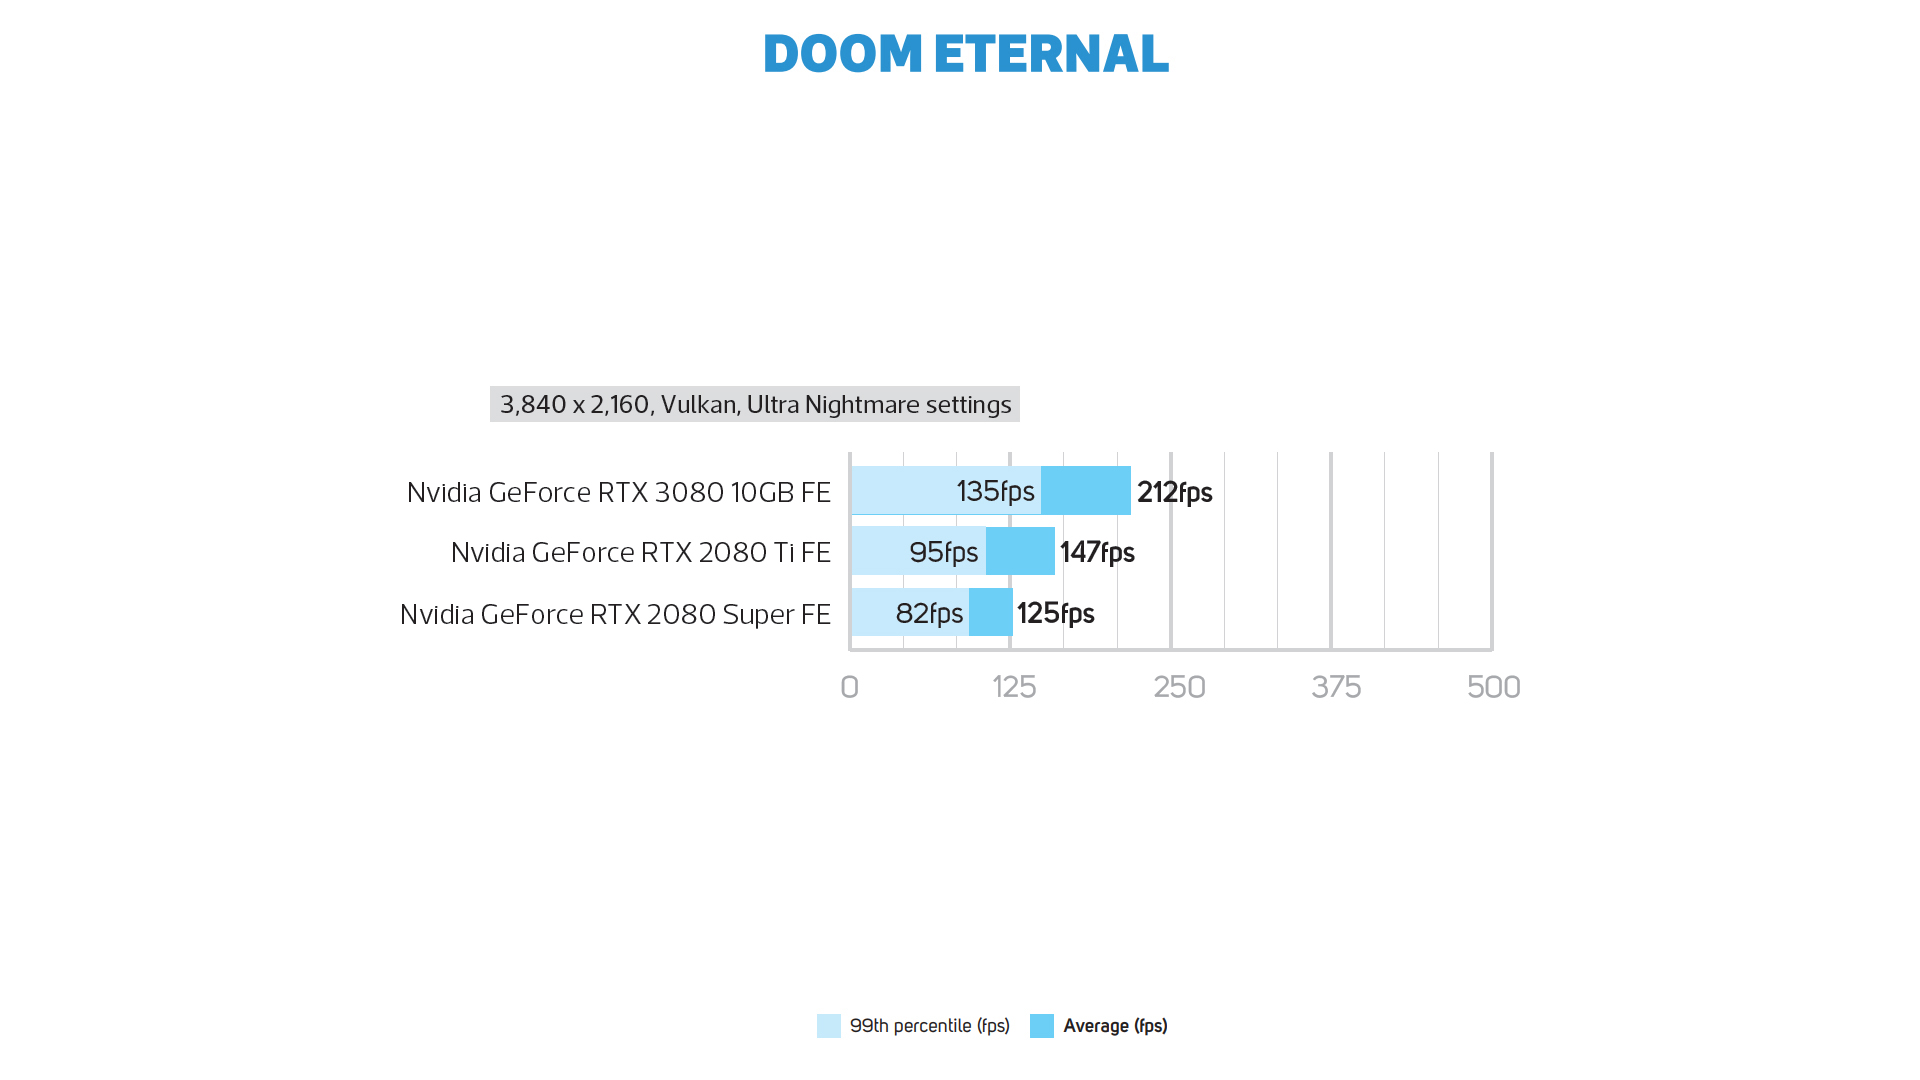 Nvidia GeForce RTX 3080 Doom Eternal 4K frame rate